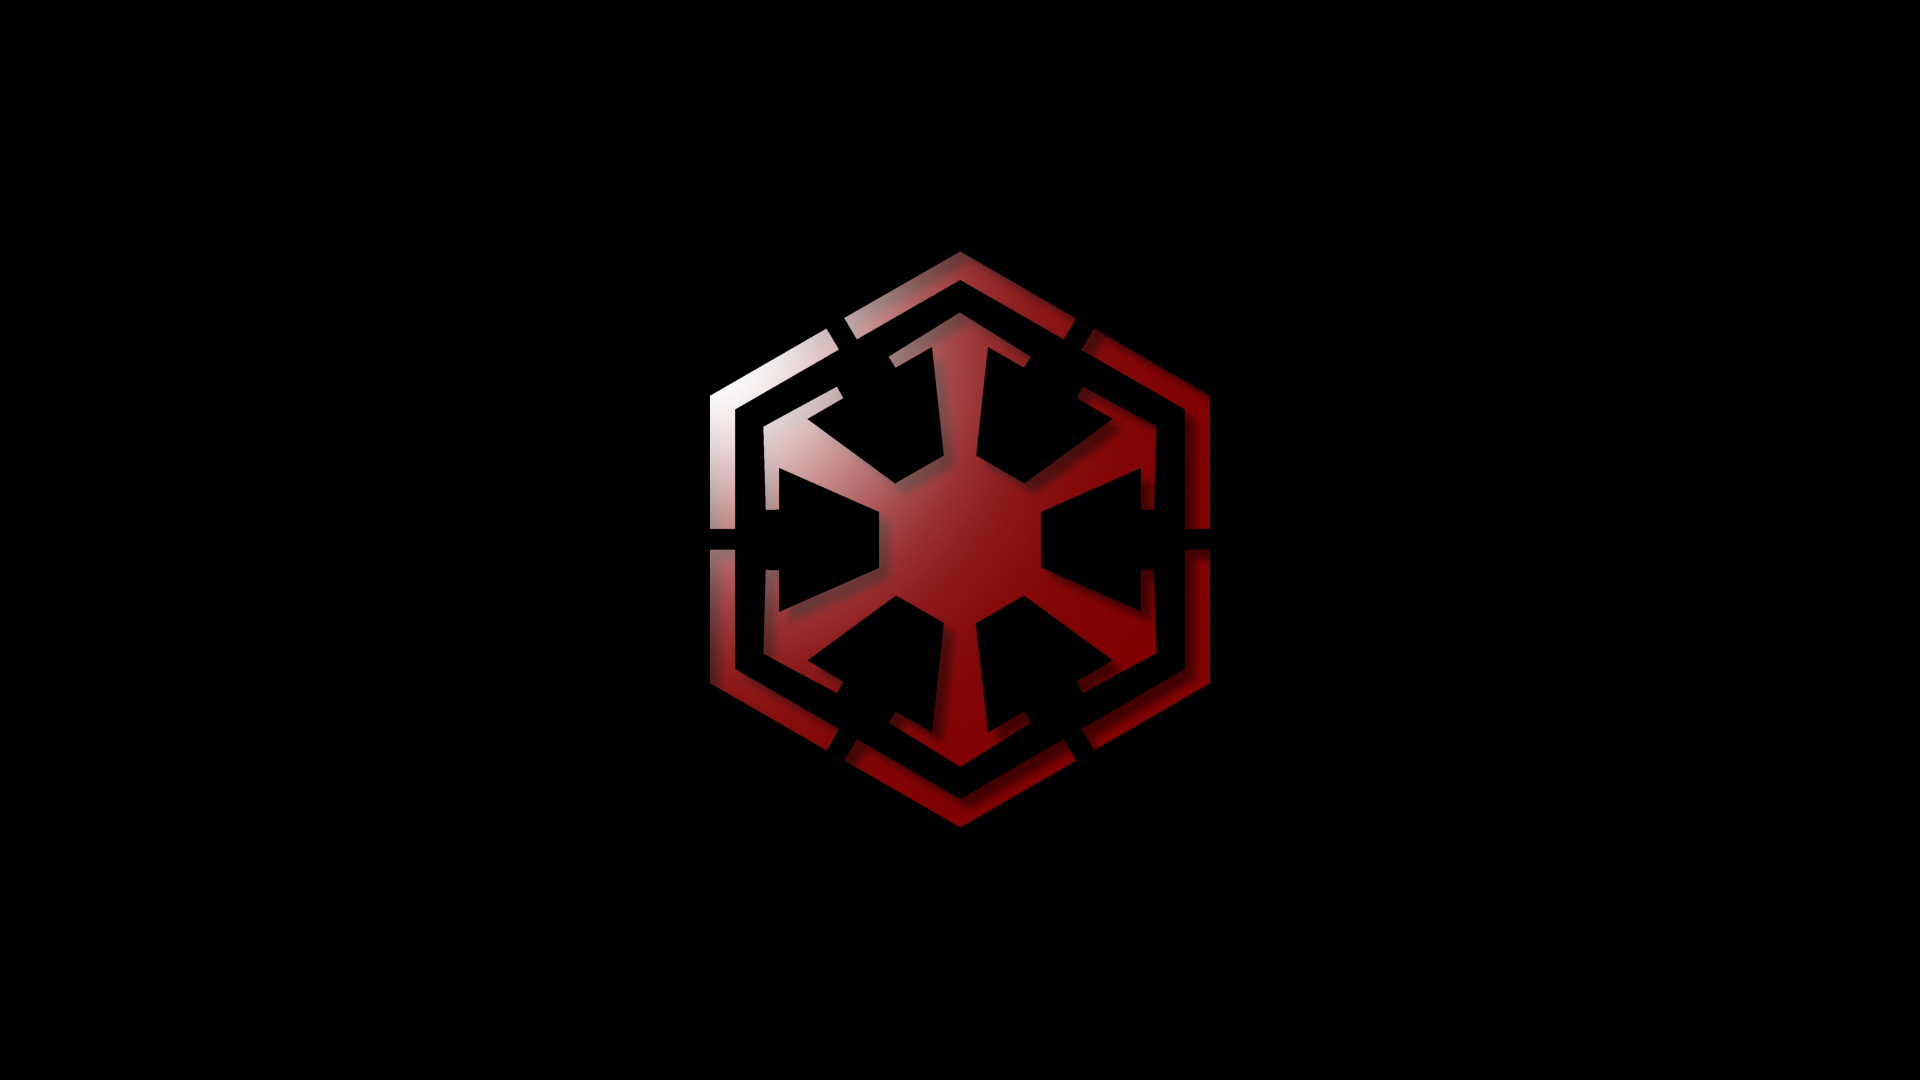 48] Sith Emblem Wallpaper on WallpaperSafari 1920x1080